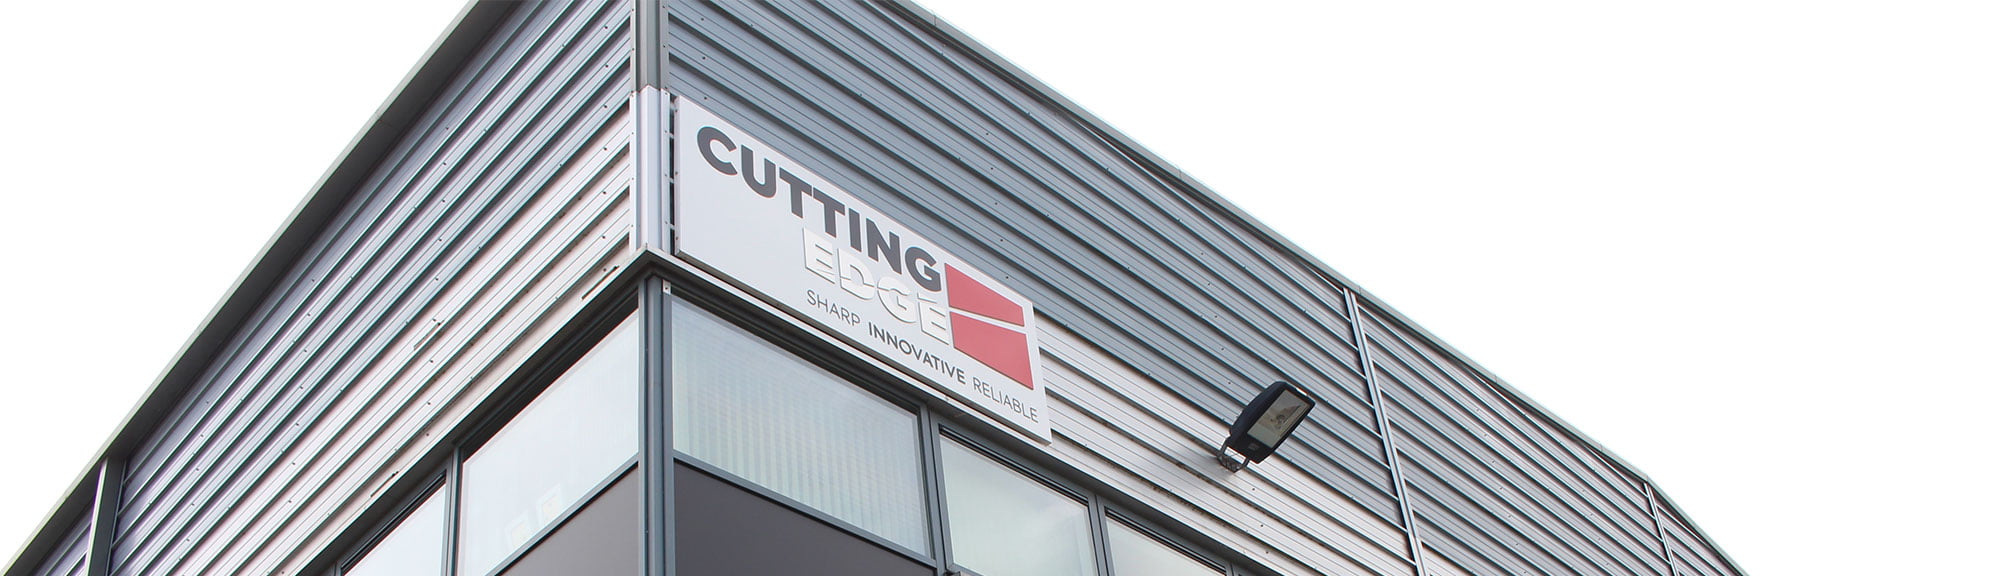 Cutting Edge Building